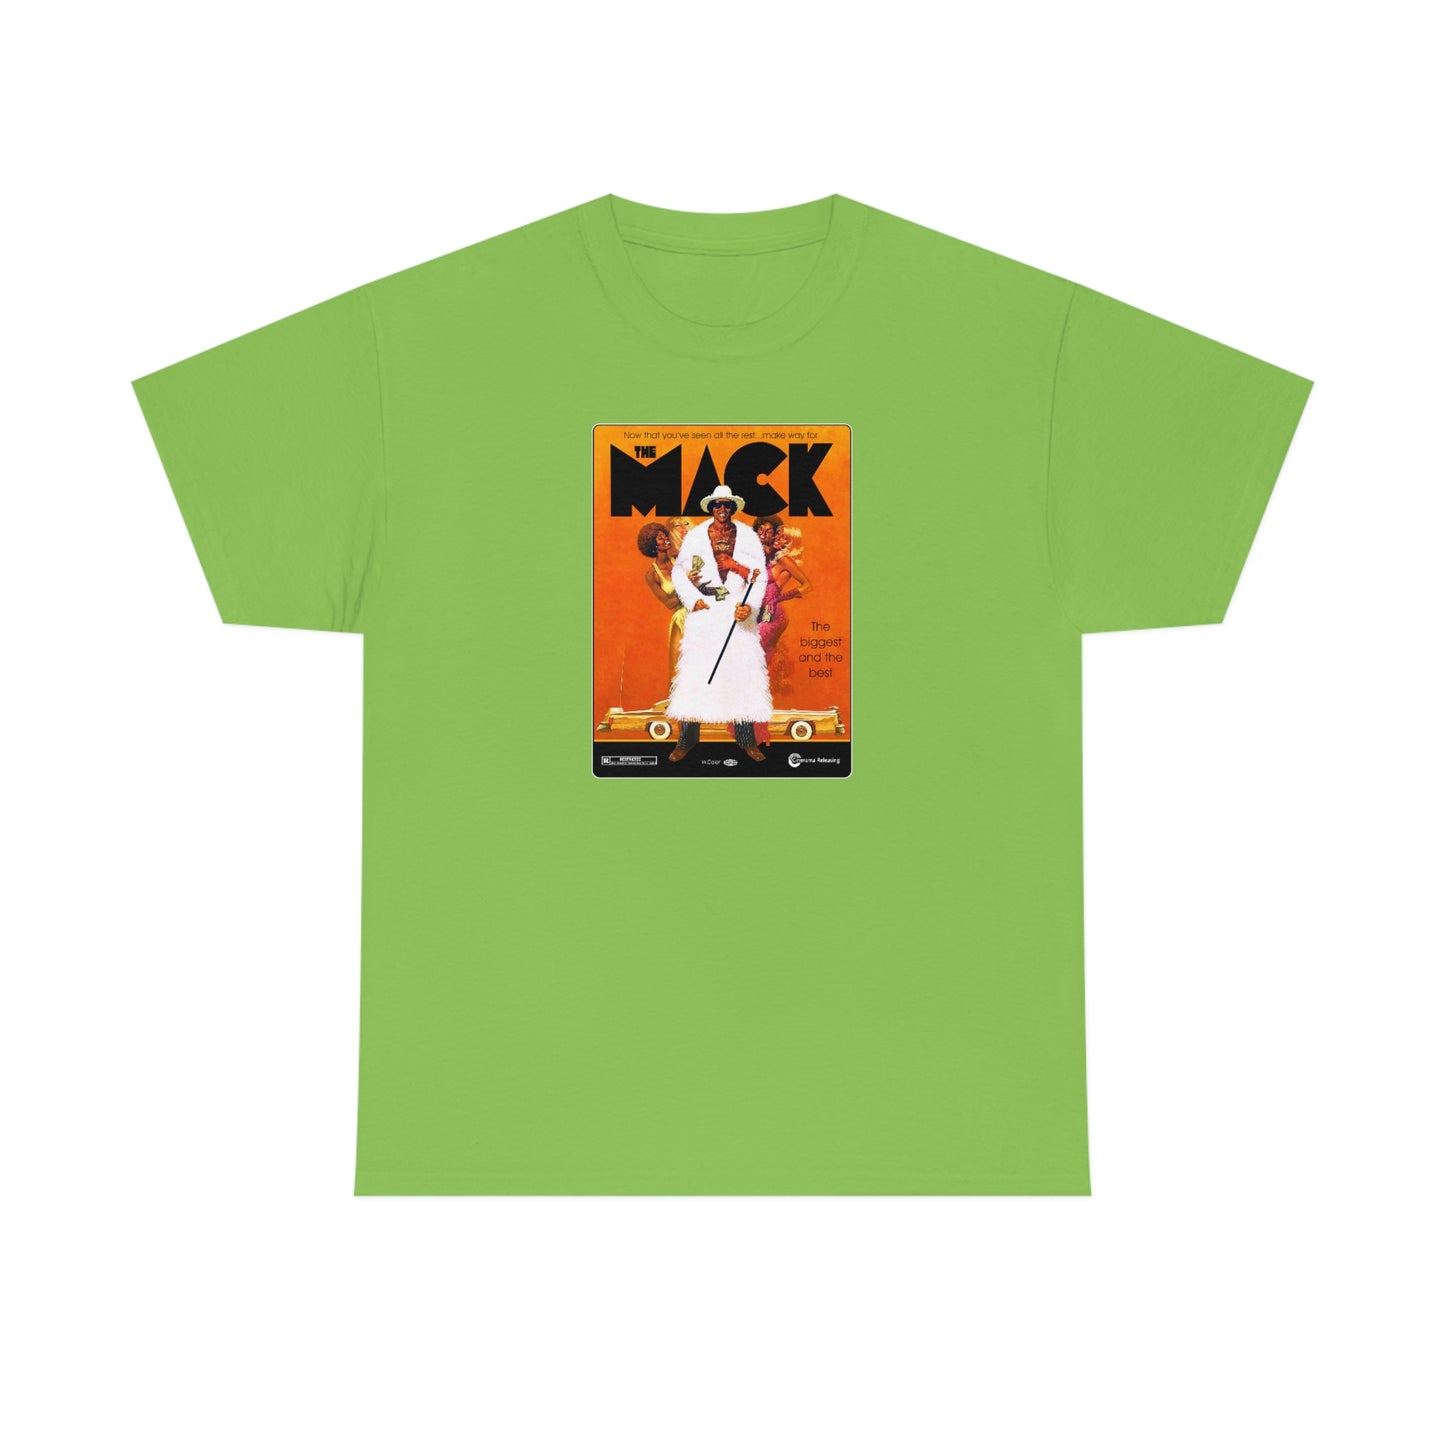 The Mack T-Shirt